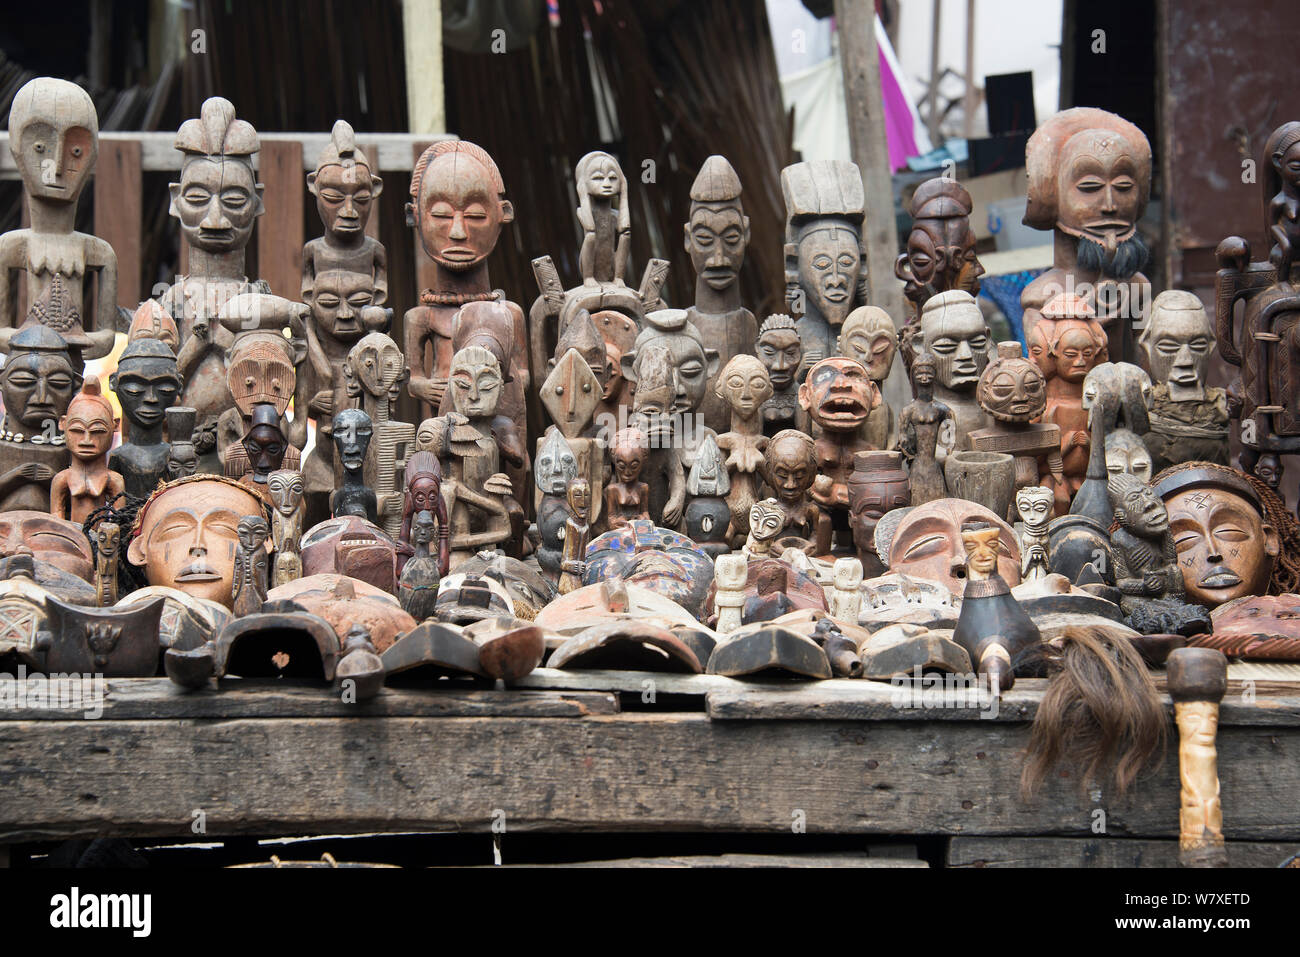 Statues for sale at Matche de la Volier (Market of the Thieves), Kinshasa, Democratic Republic of the Congo. May 2012. Stock Photo